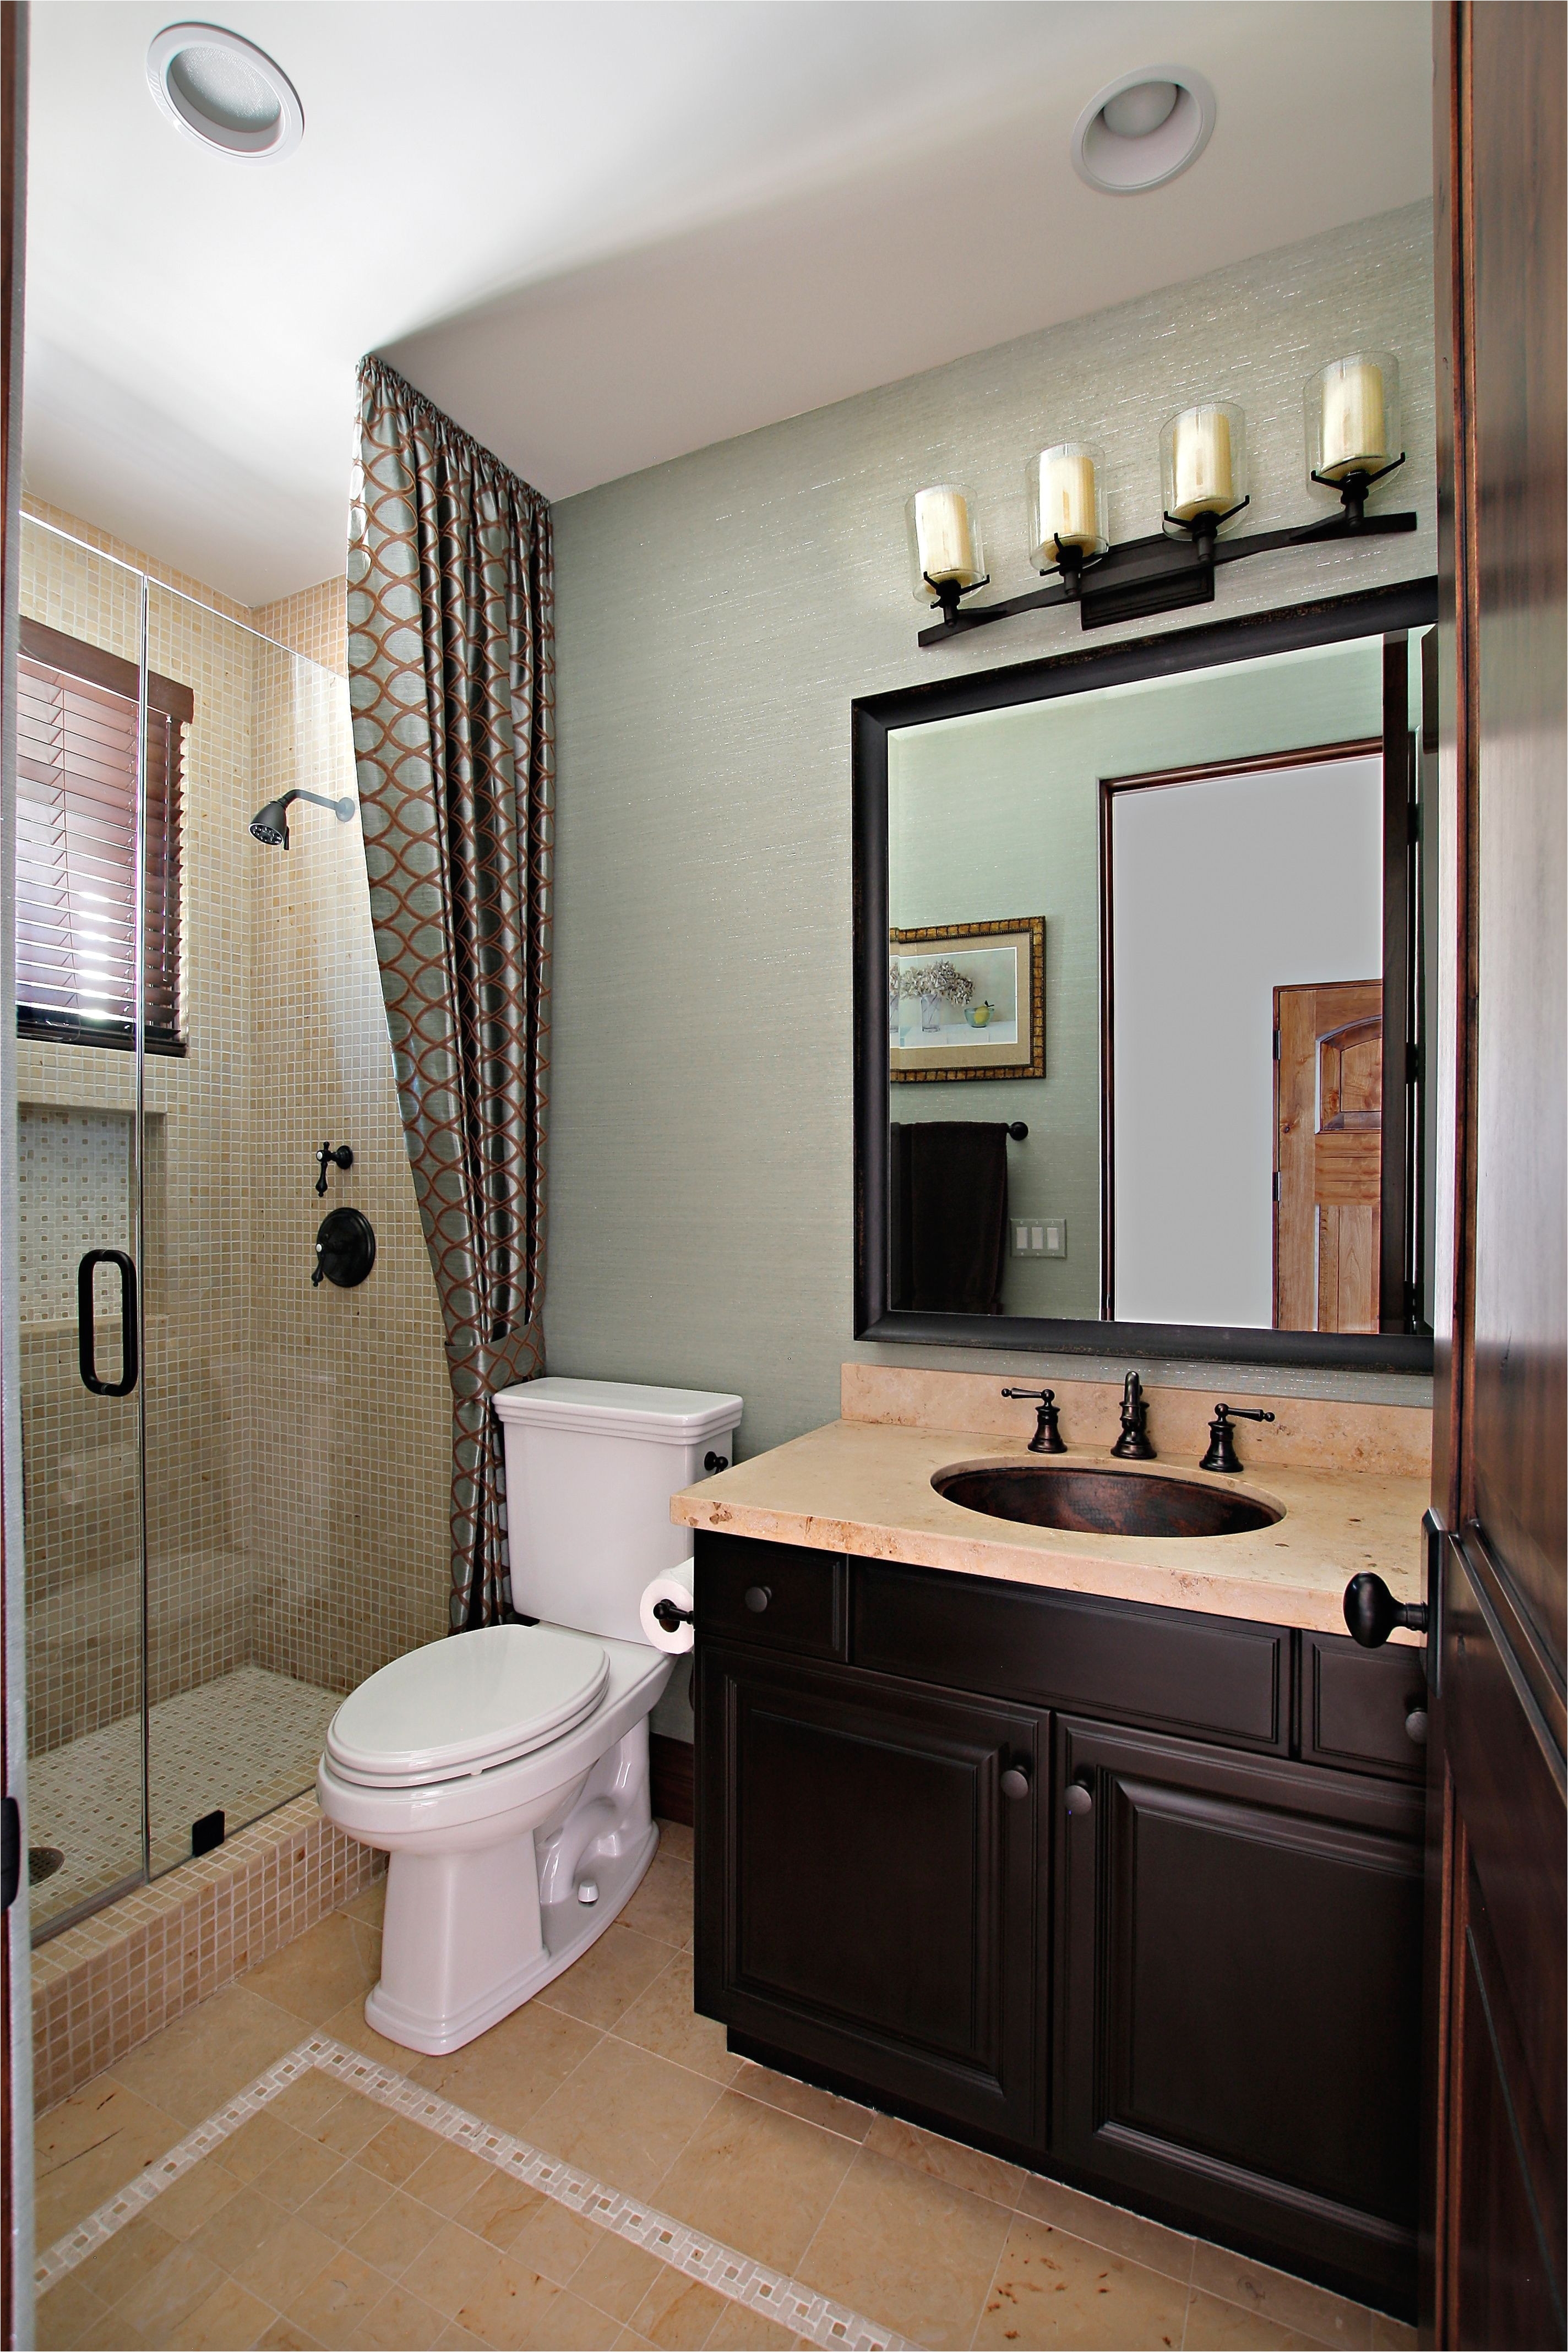 Design Ideas for Bathroom Shower Green Exterior Design with Extra Tub Shower Ideas for Small